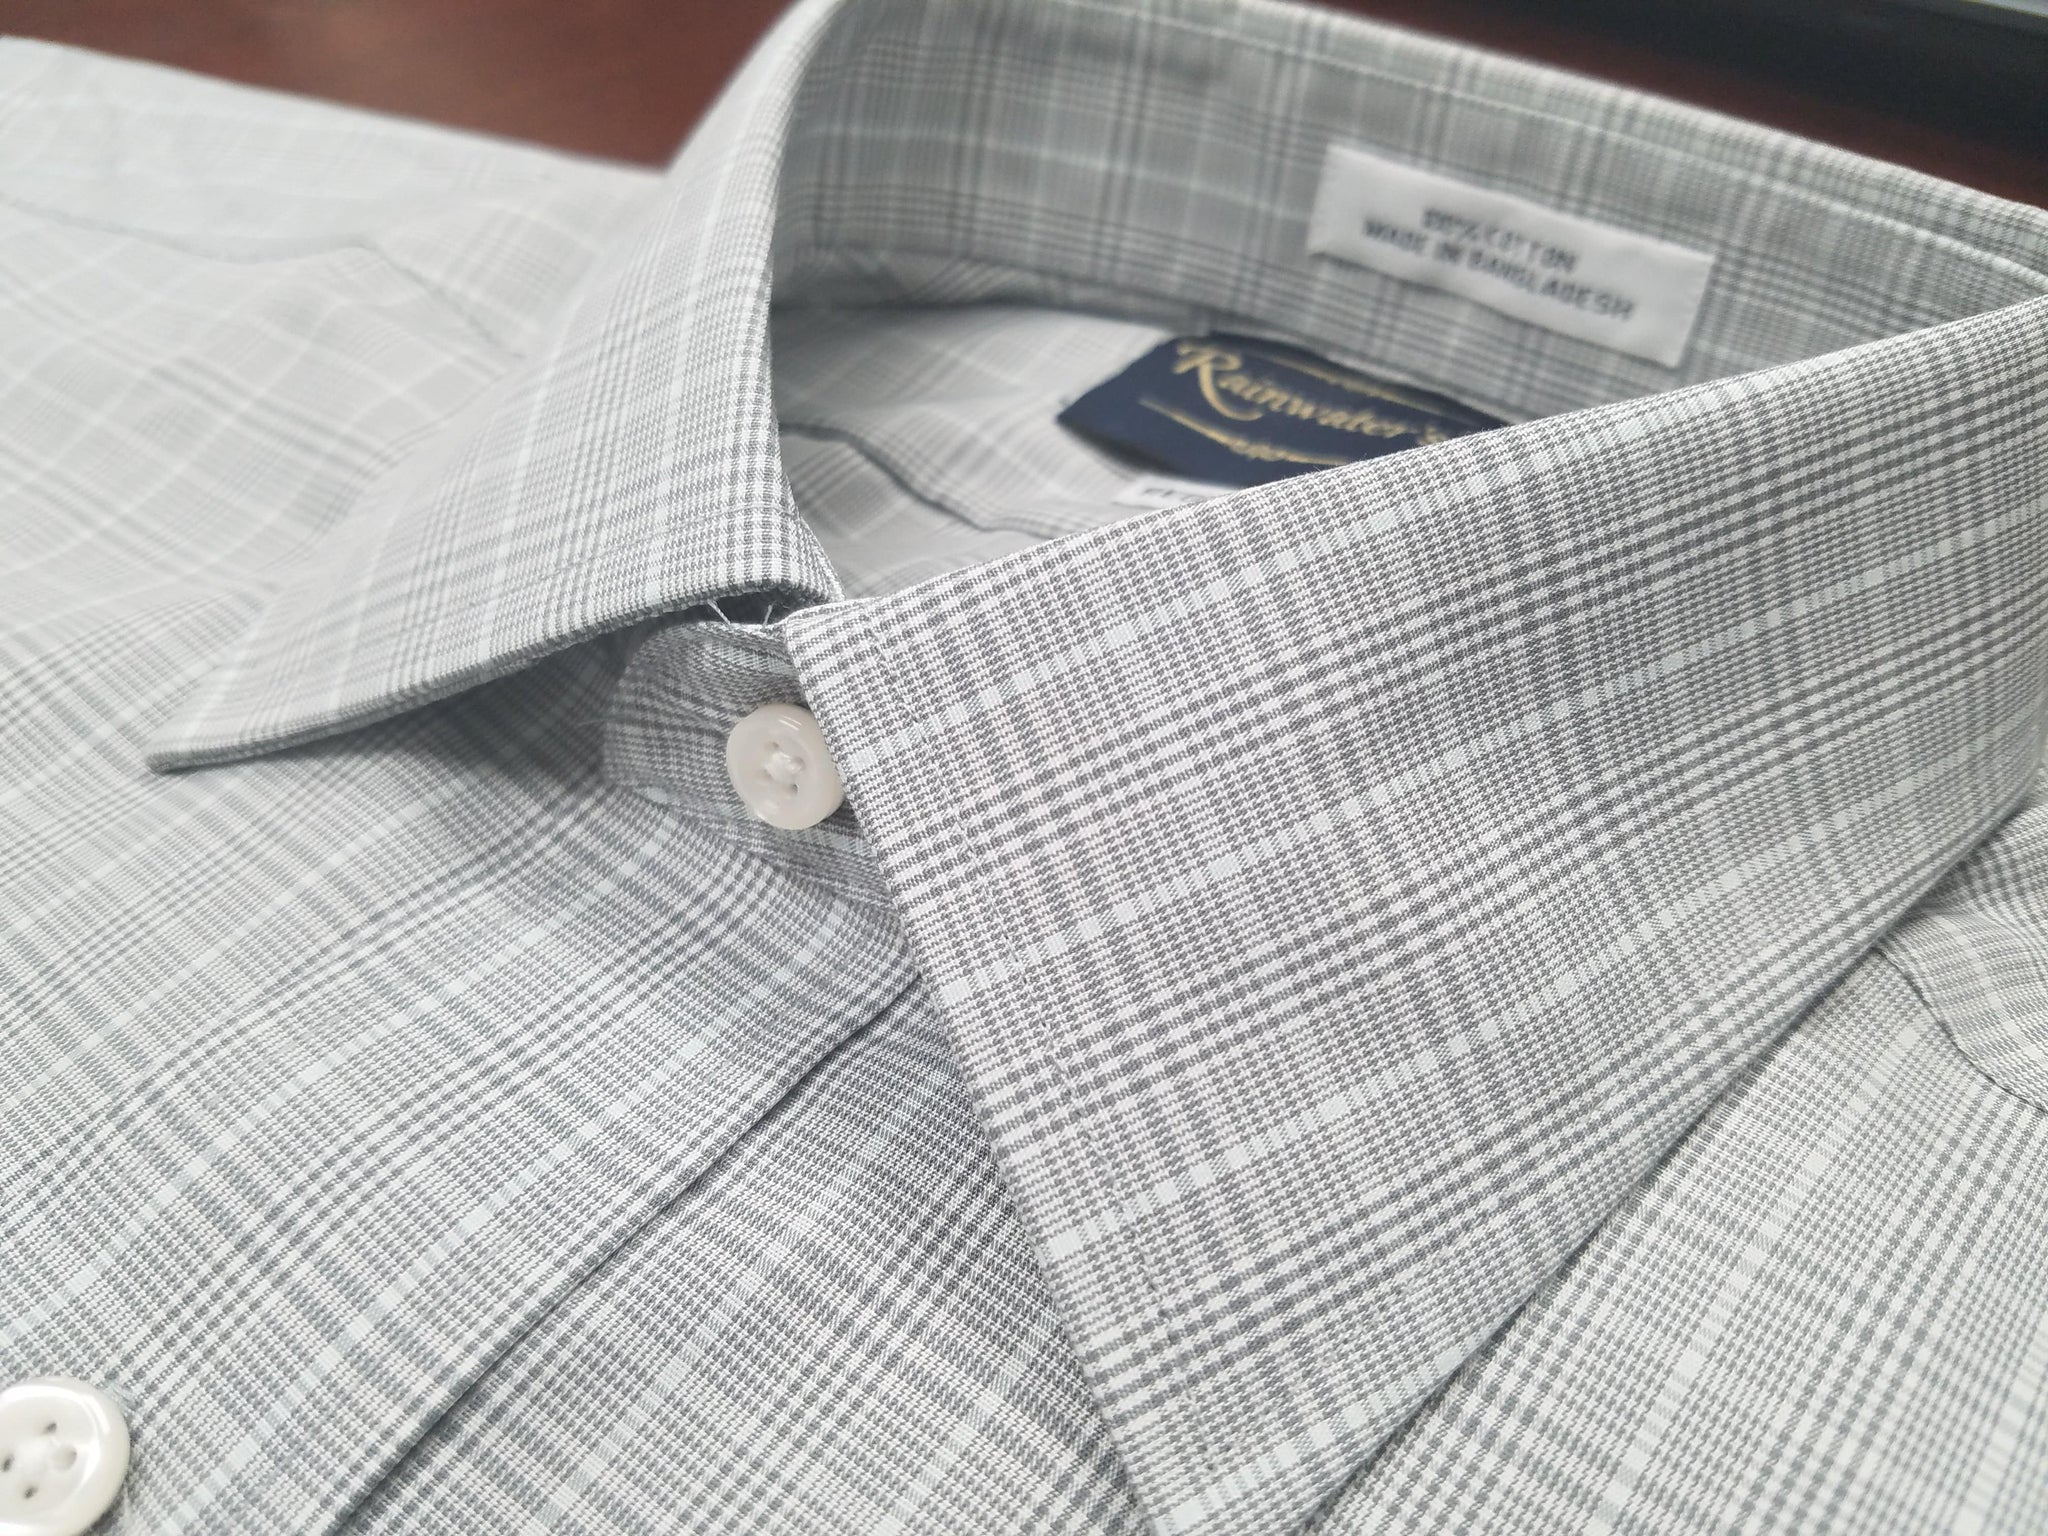 Rainwater's Non-Iron 100% Cotton Grey and Light Blue Plaid Dress Shirt - Rainwater's Men's Clothing and Tuxedo Rental